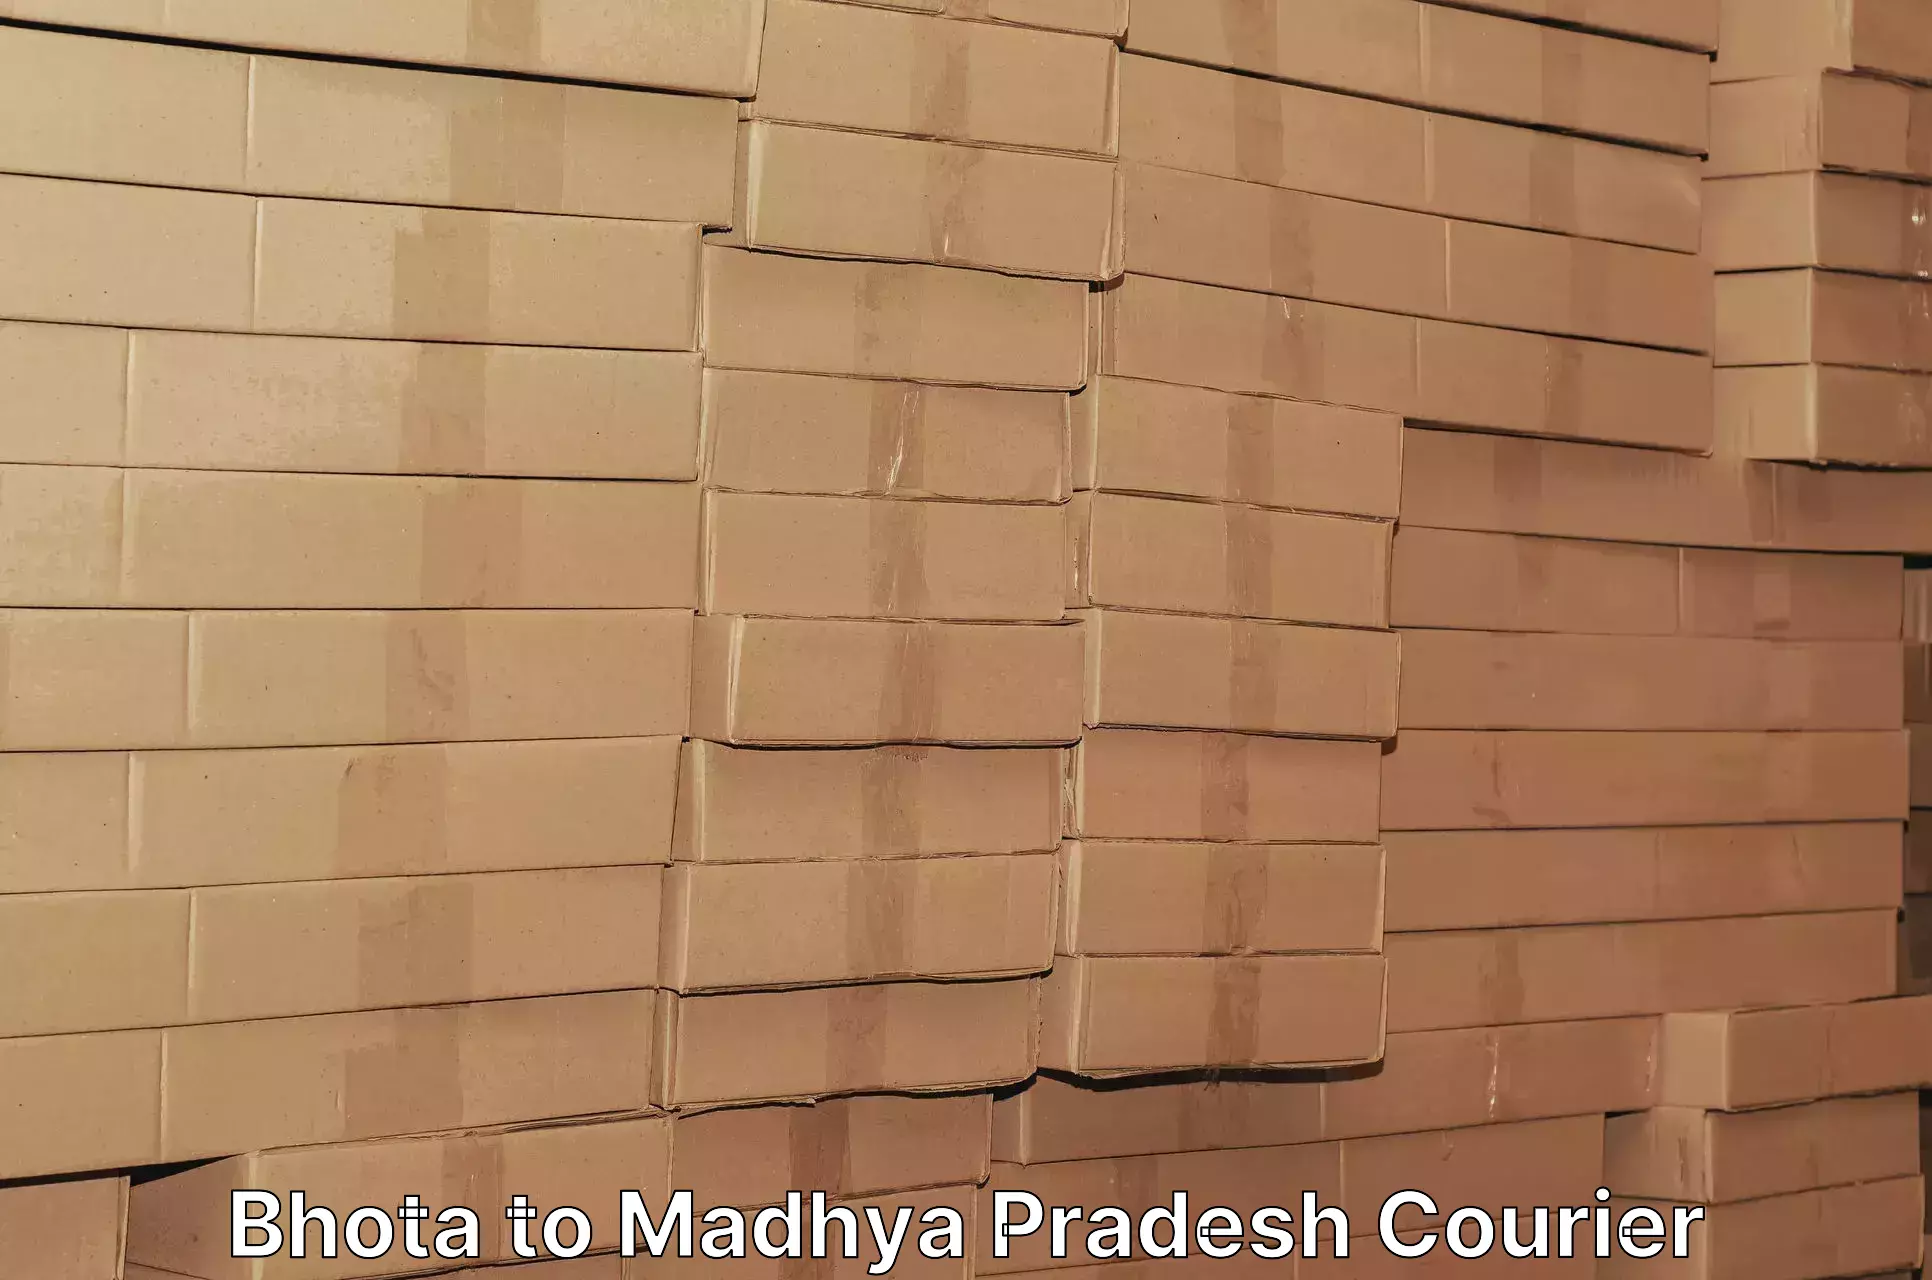 24/7 courier service in Bhota to Madhya Pradesh